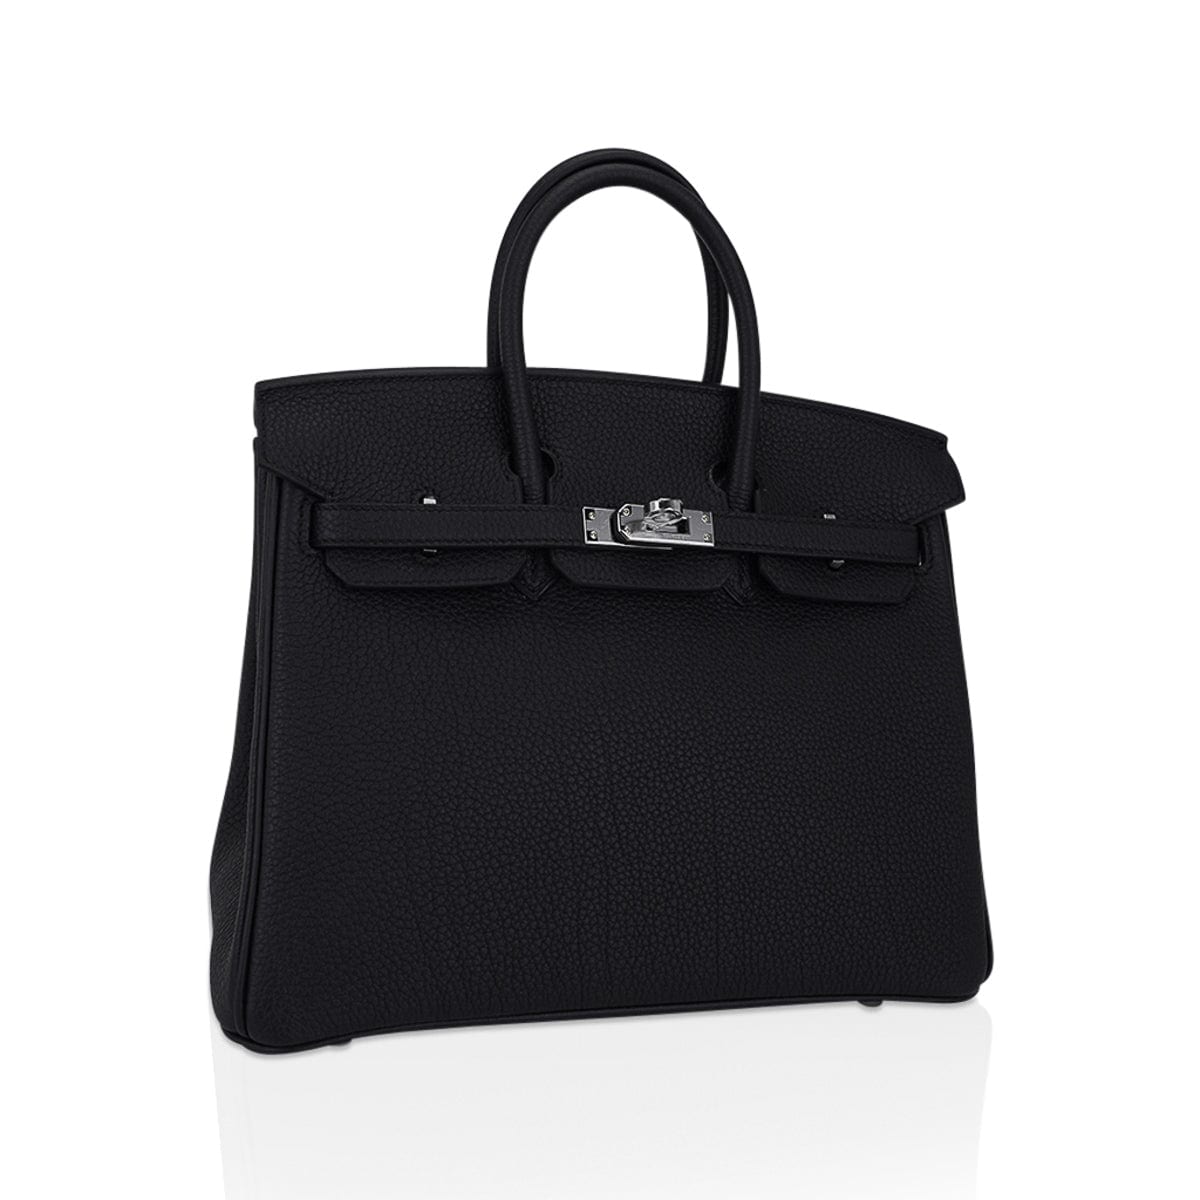 Hermes Birkin Bag 25 Black Togo Silver Hardware #birkin #bag #25